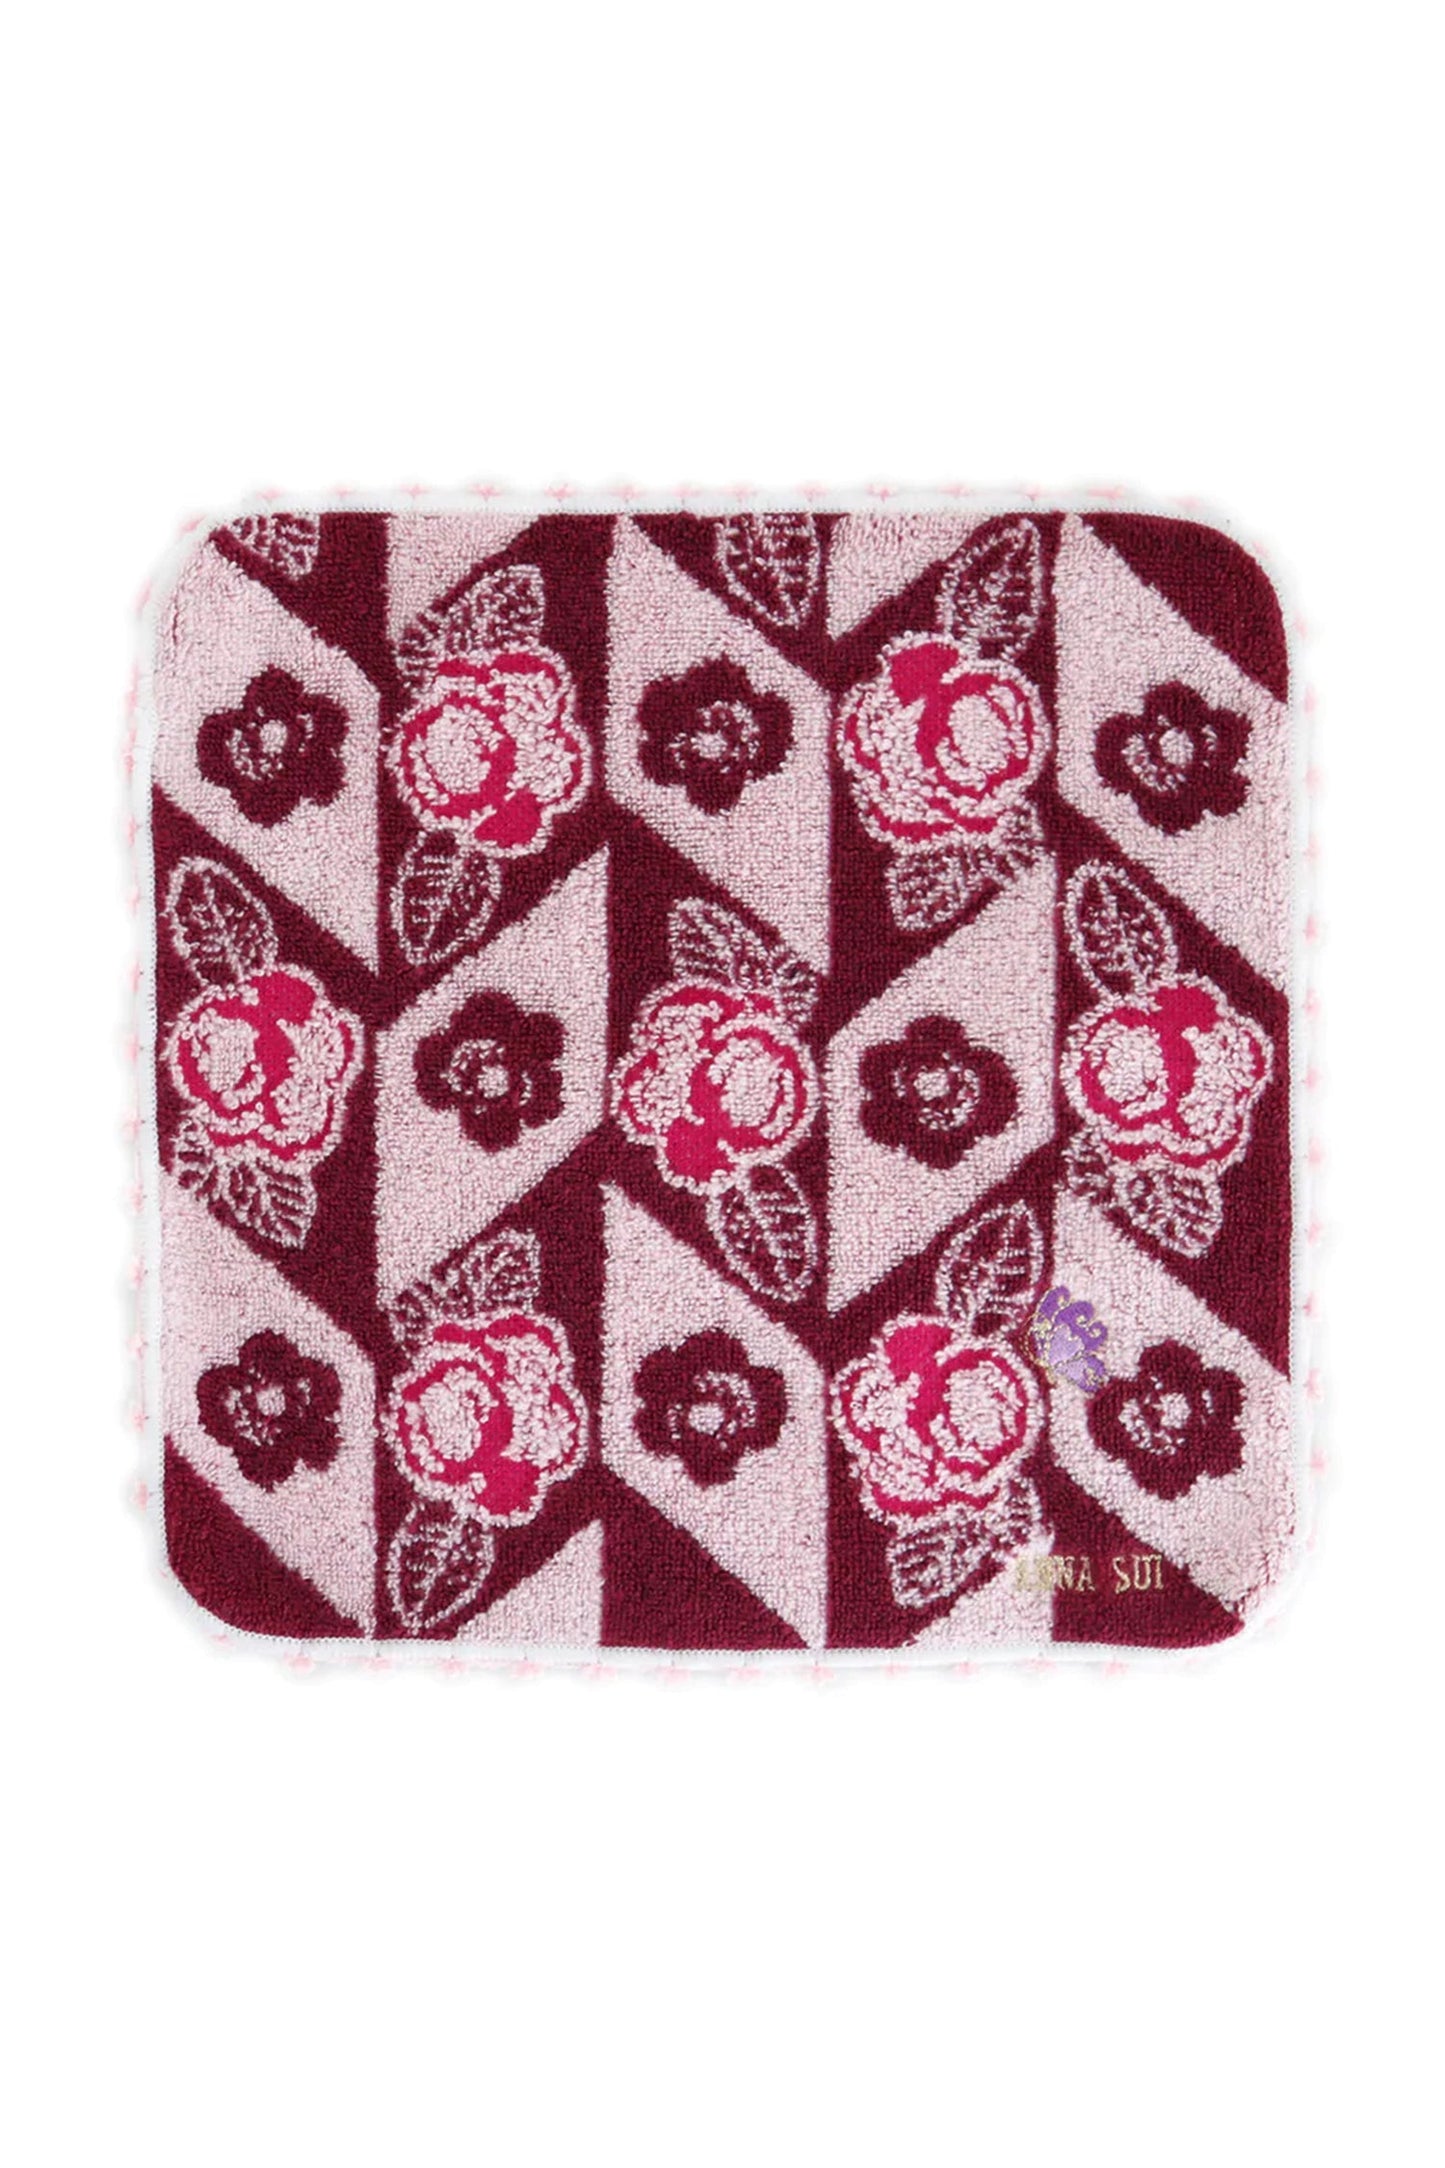 Washcloth, floral design, alternate burgundy/red Anna Sui label on edge, purple butterfly, black hems